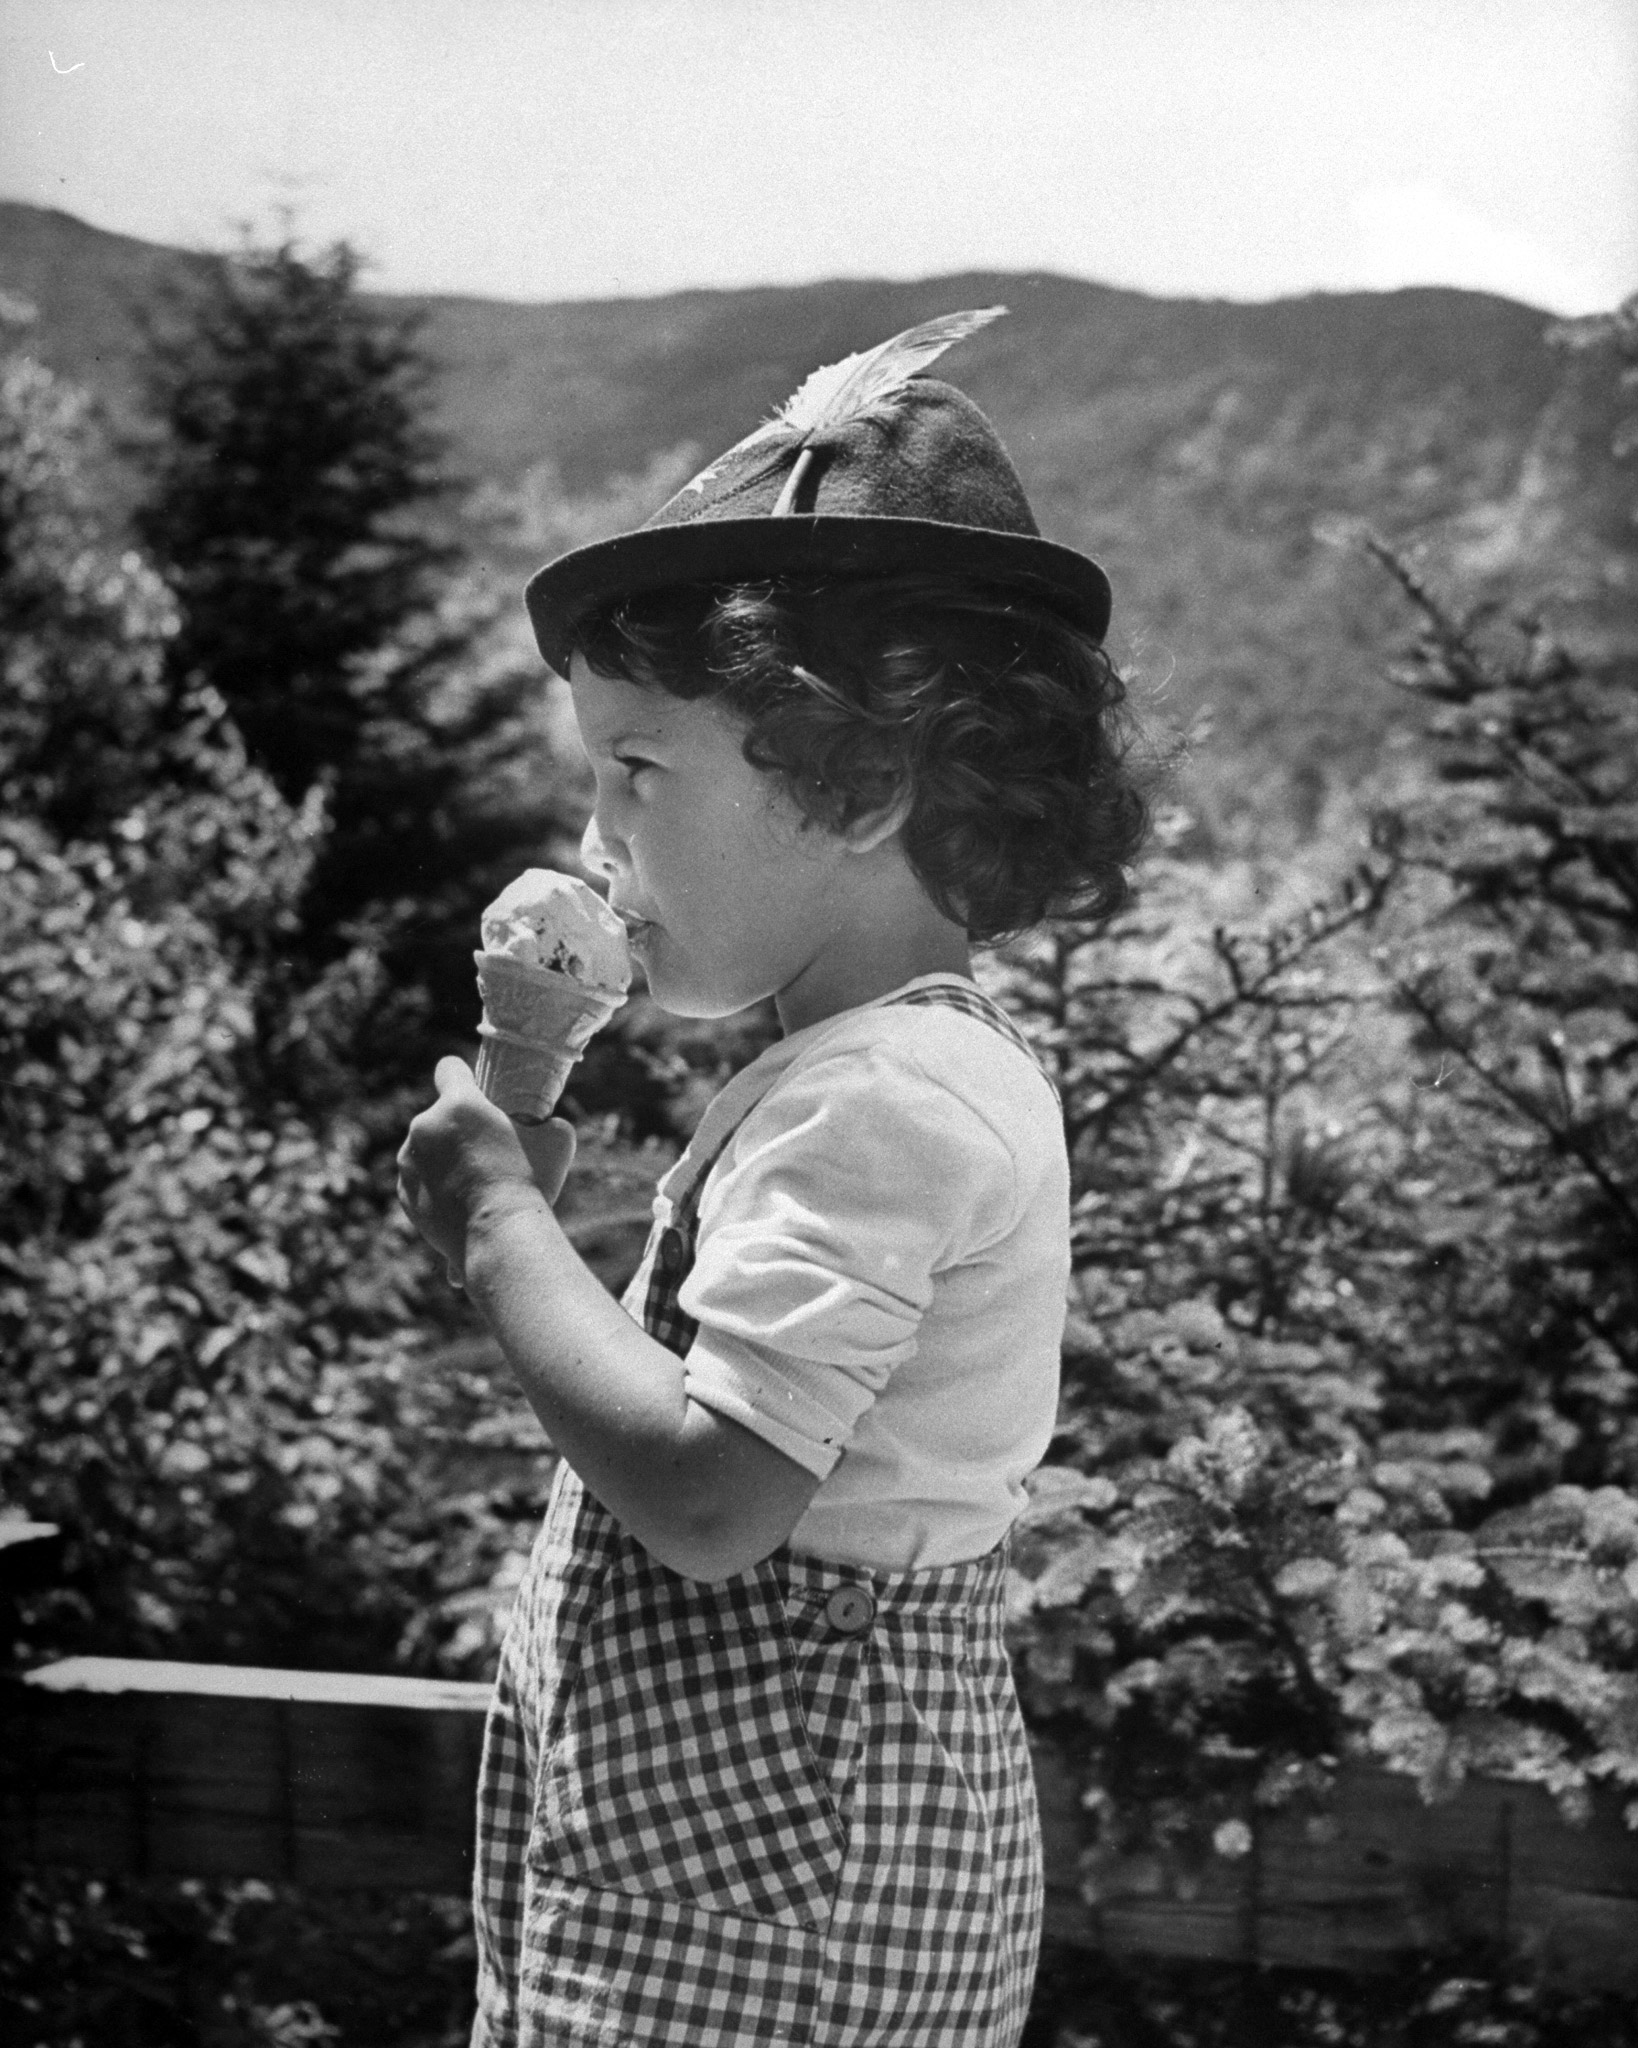 Young girl eating ice cream, 1946.